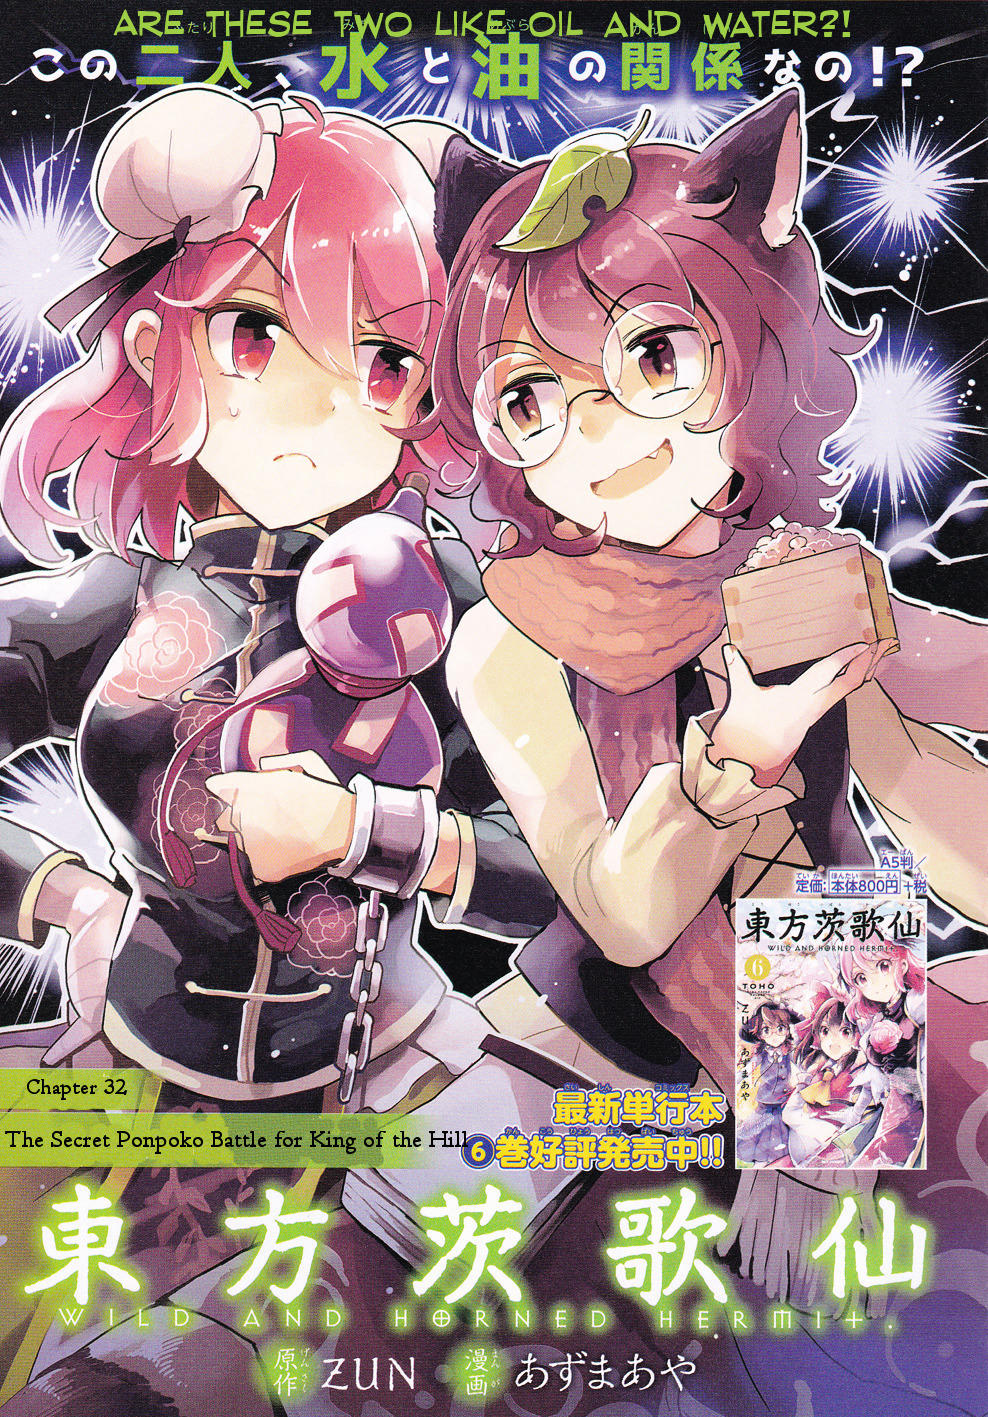 Read Touhou Ibarakasen Wild And Horned Hermit Chapter 32 Manga Online Free At Mangabat Art